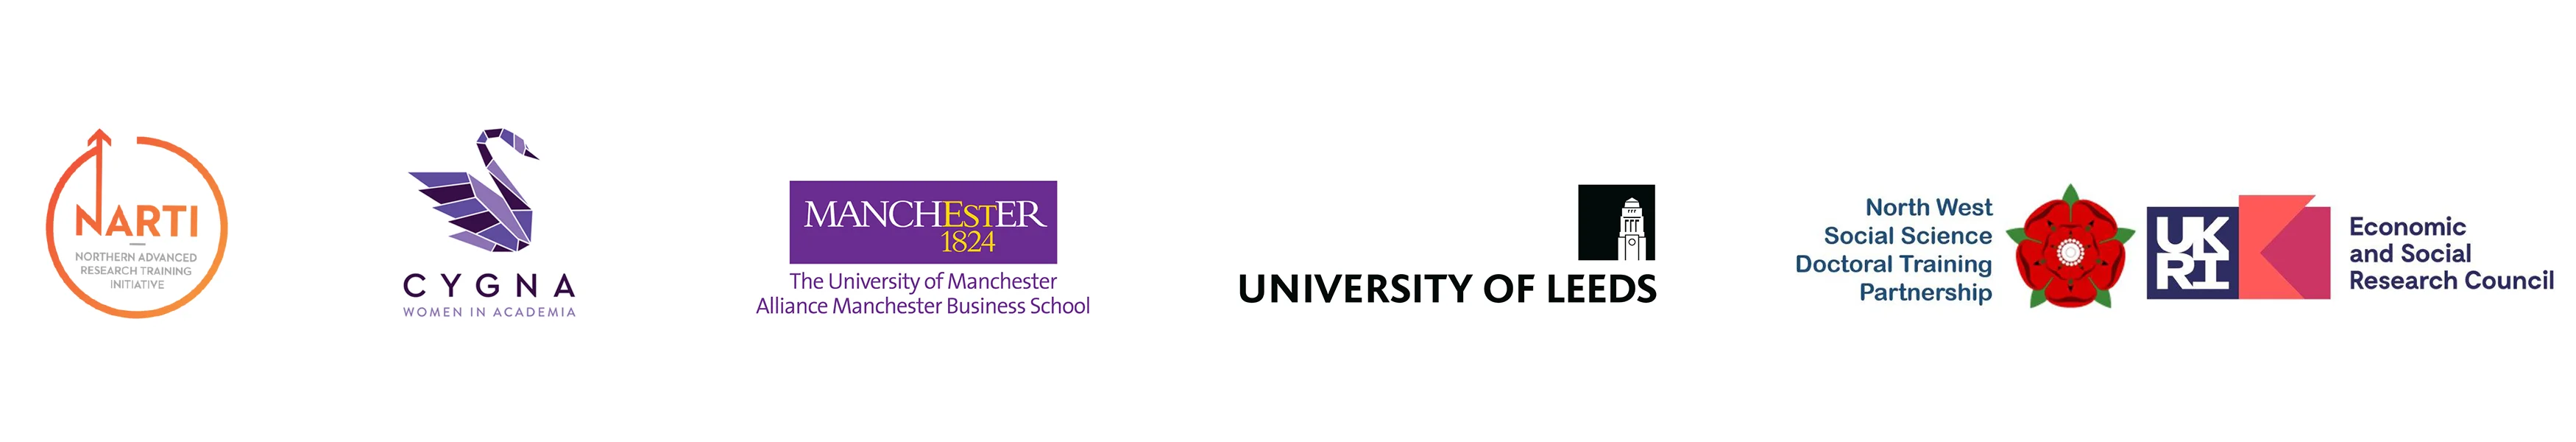 NARTI, CYGNA, AMBS and University of Leeds logos